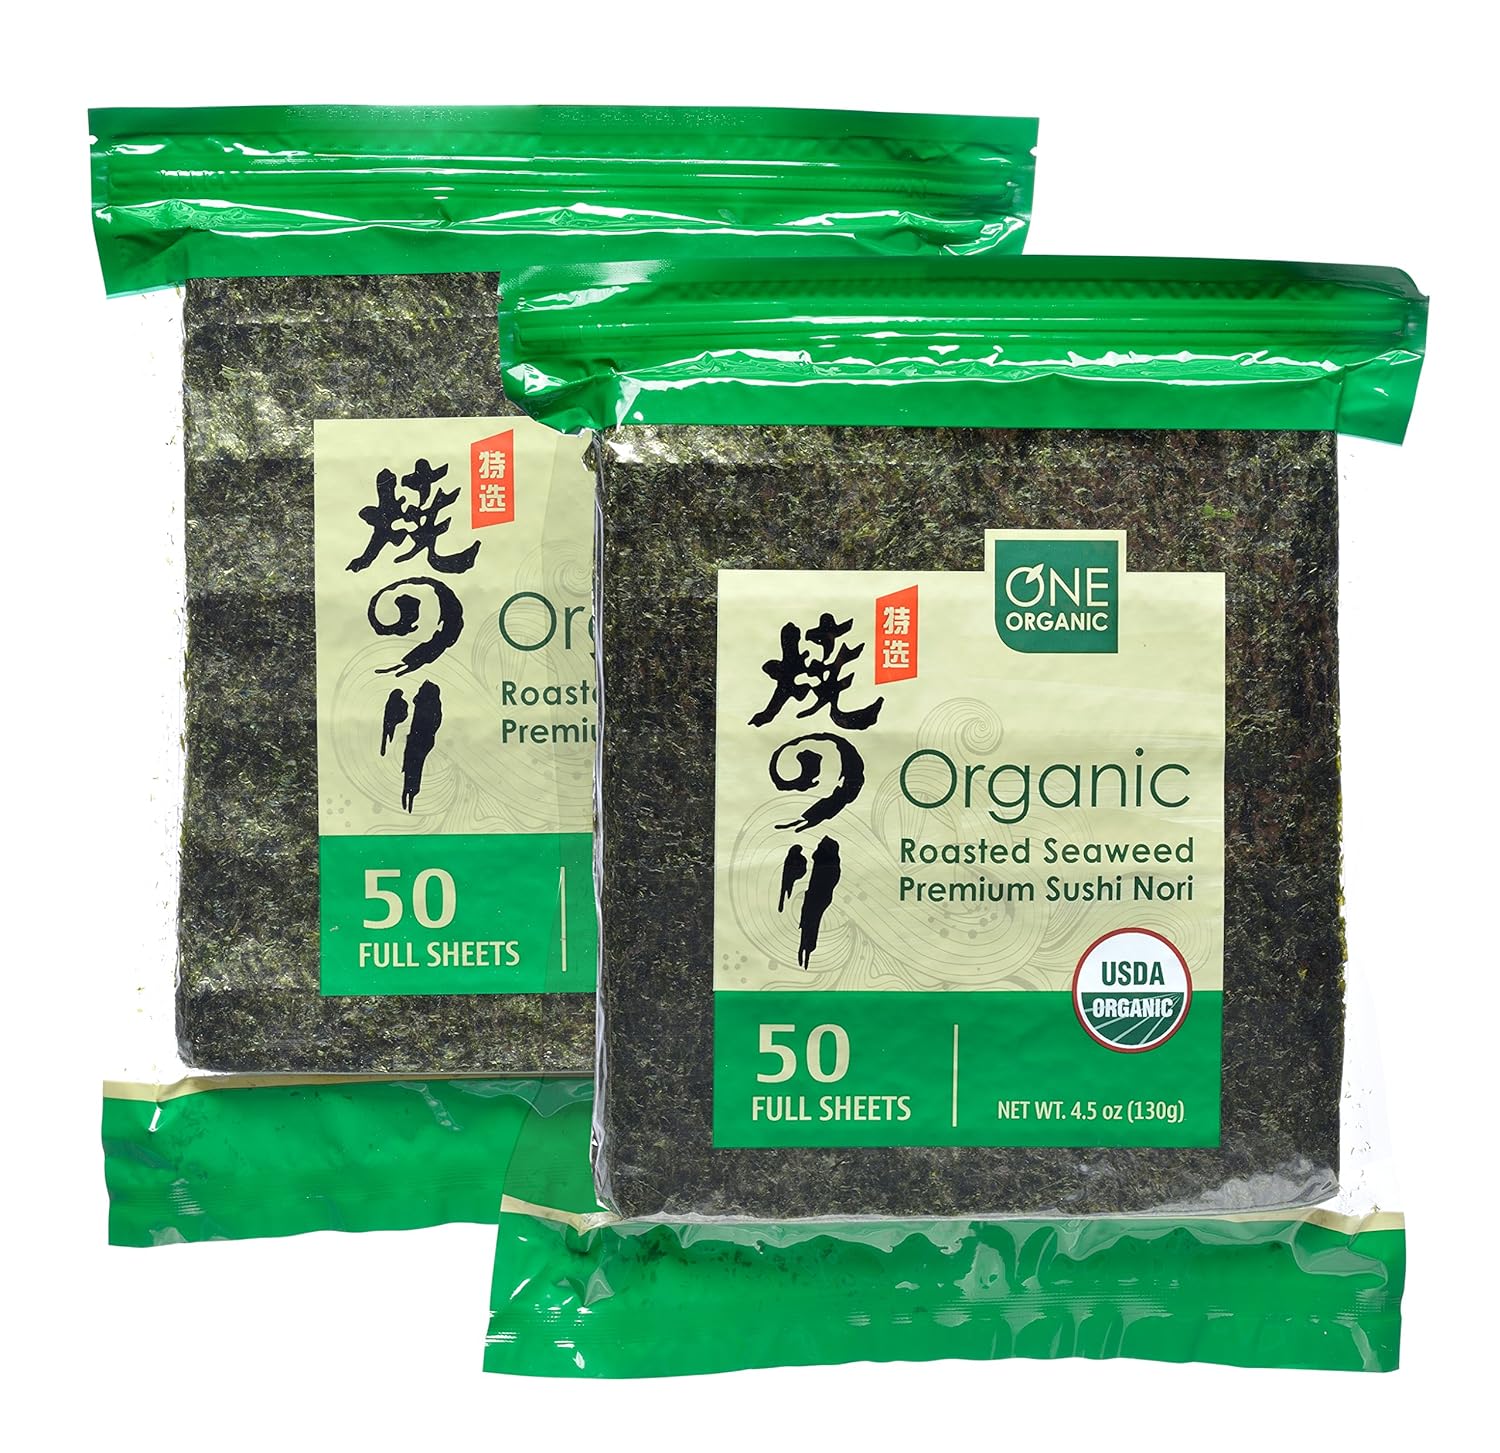 Organic Seaweed: Iodine, Minerals, and Ecosystem Sustainability